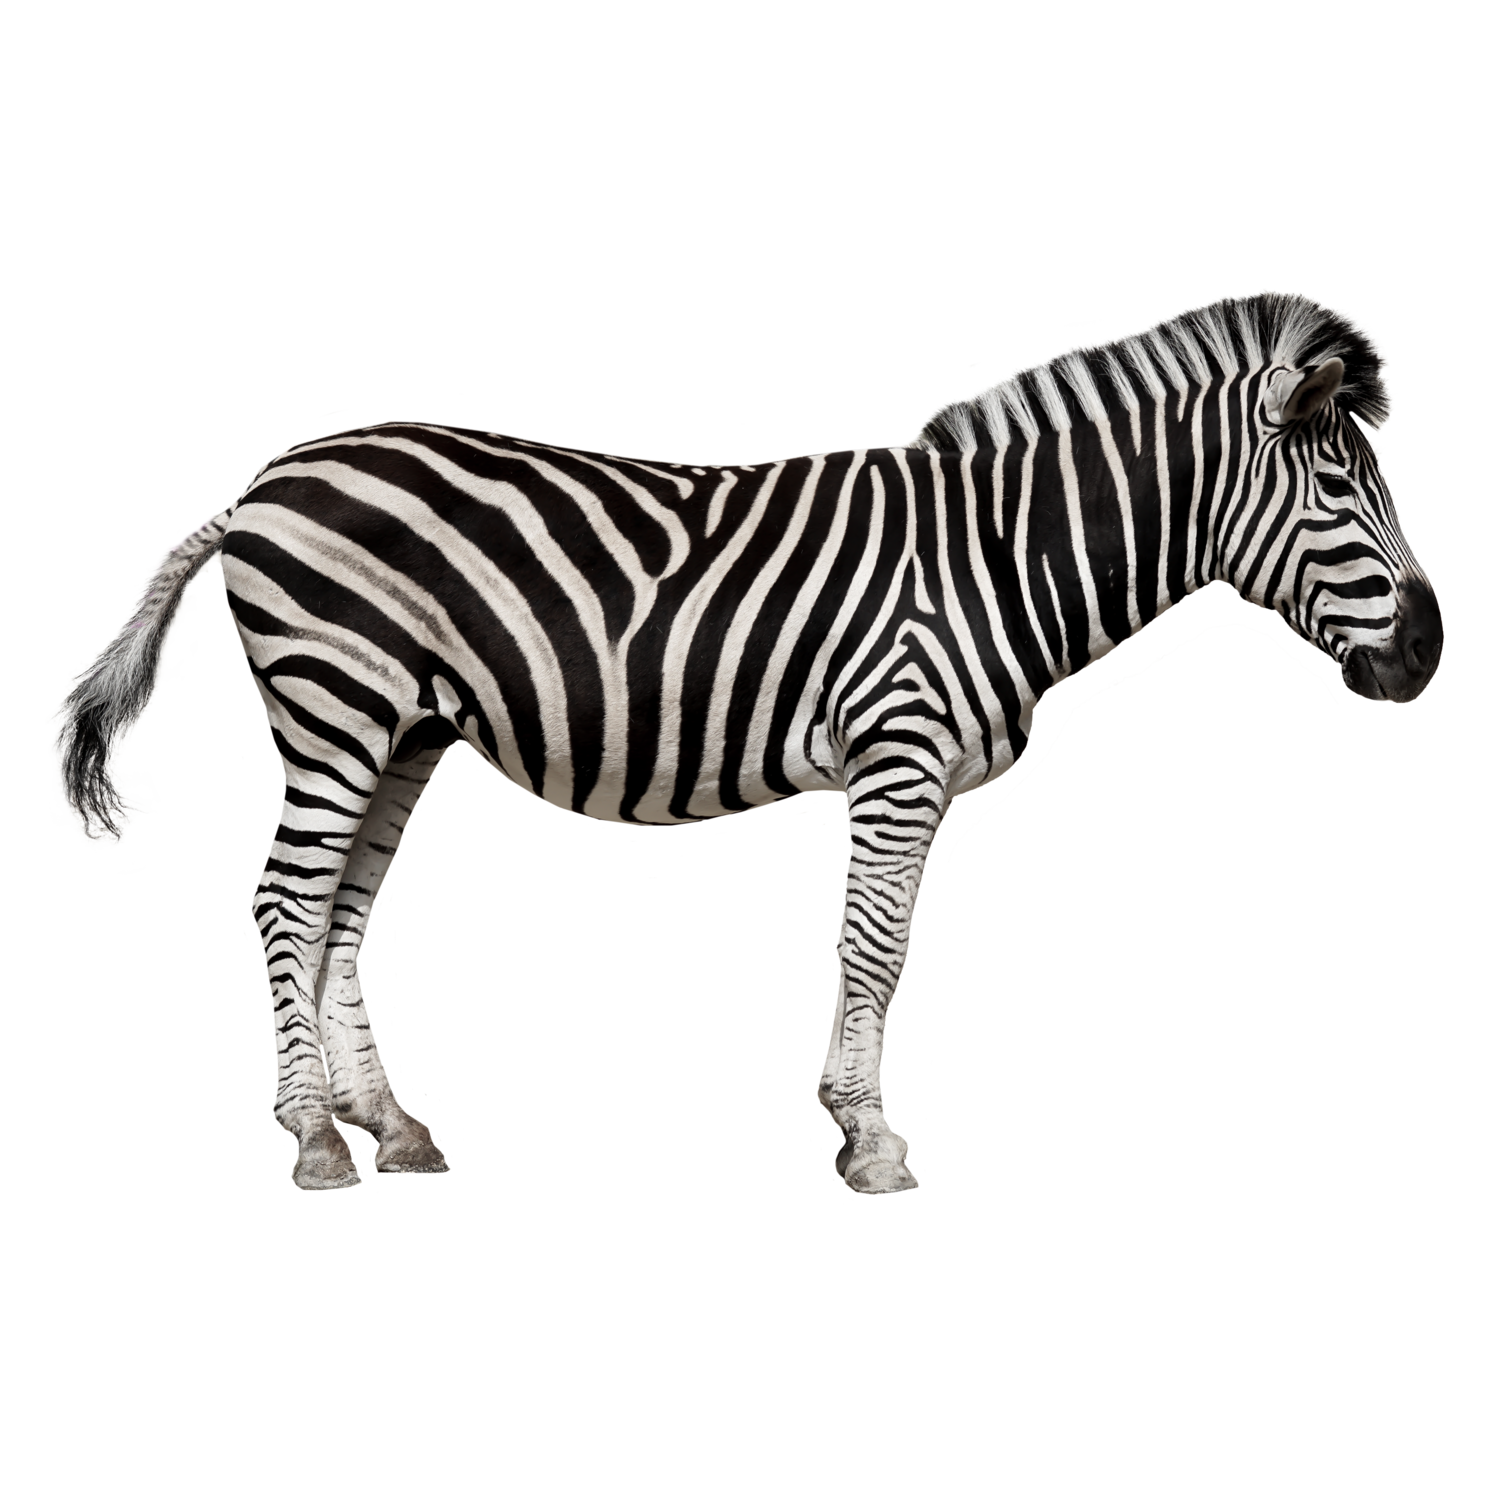 Zebra PNG Image Background